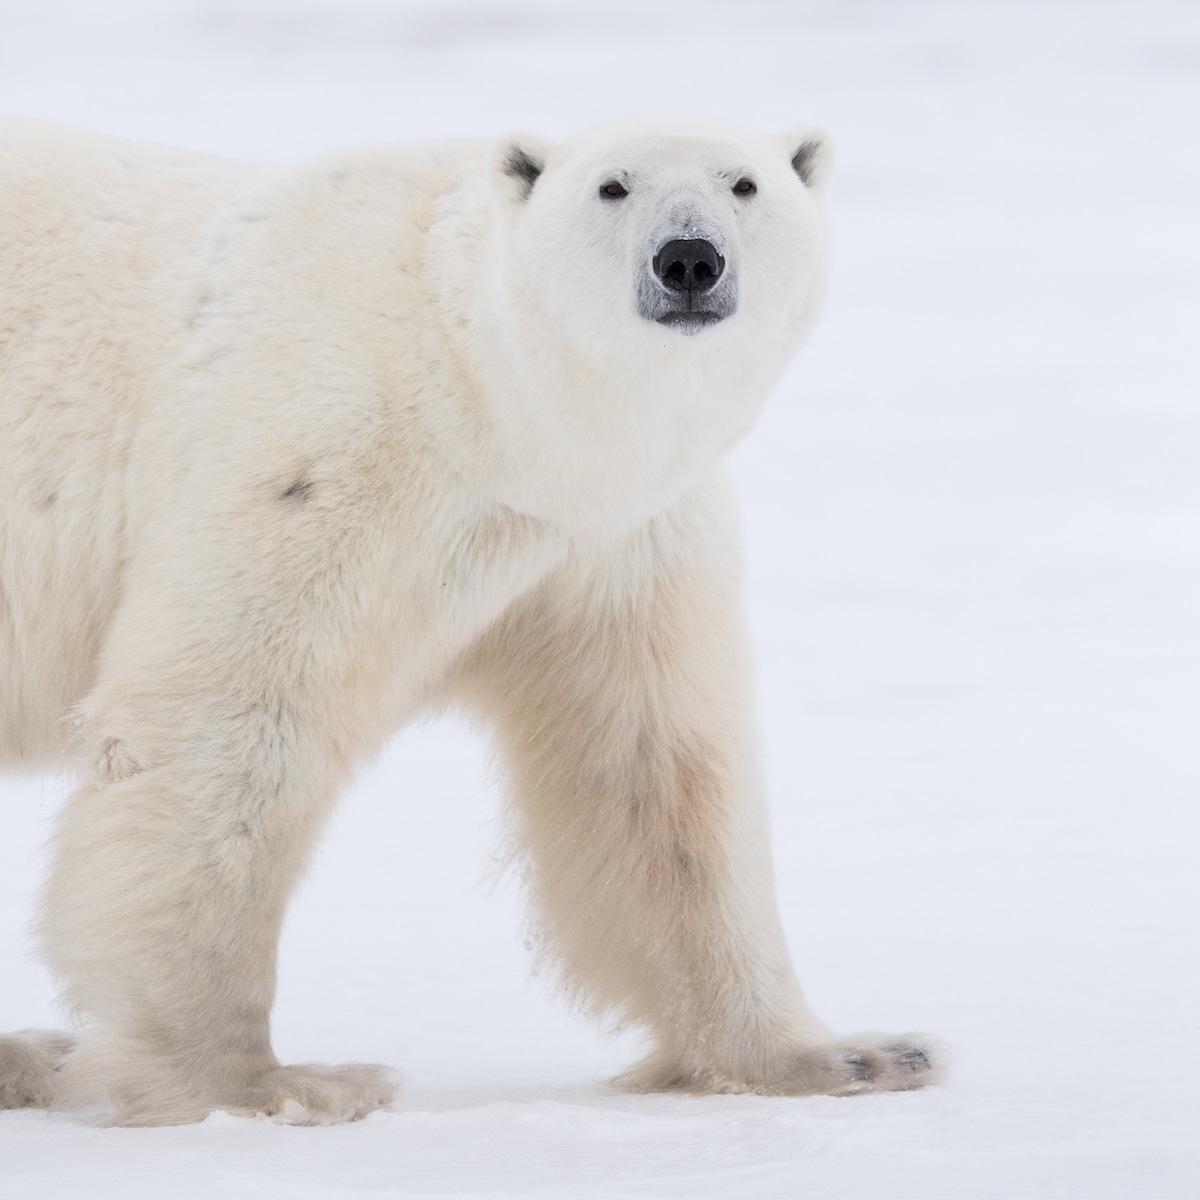 Hudson Bay Polar Bears by George Turner